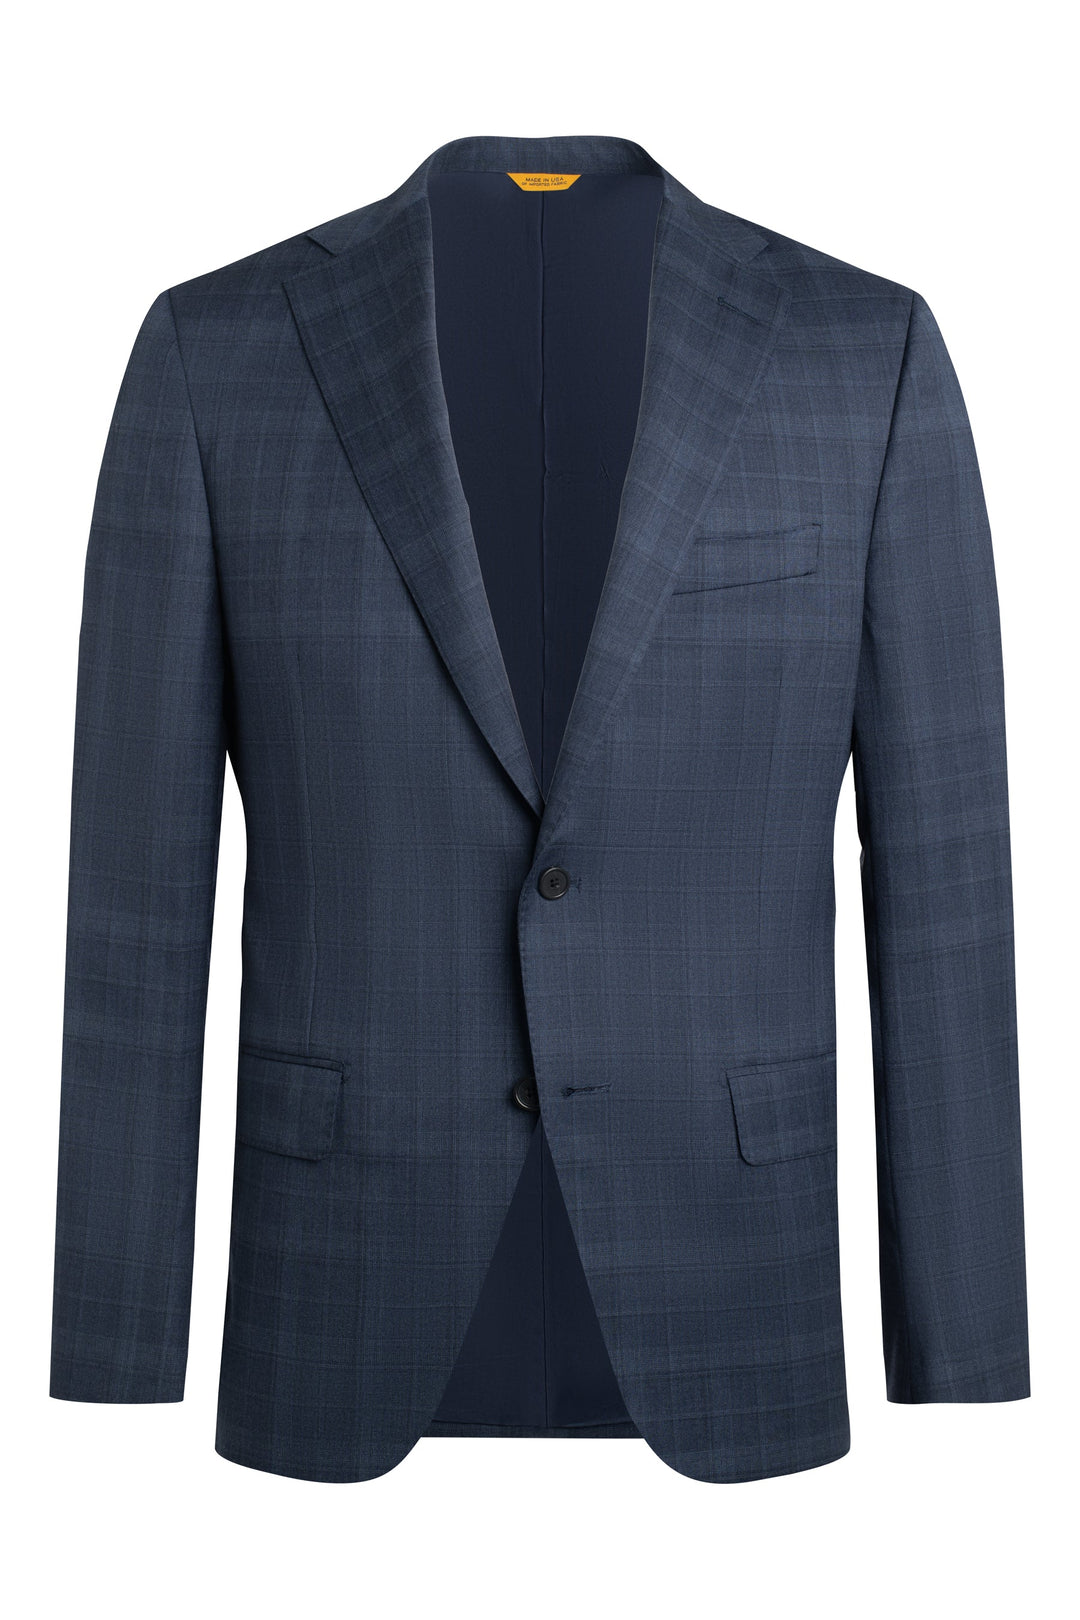 Slate Blue Plaid Suit